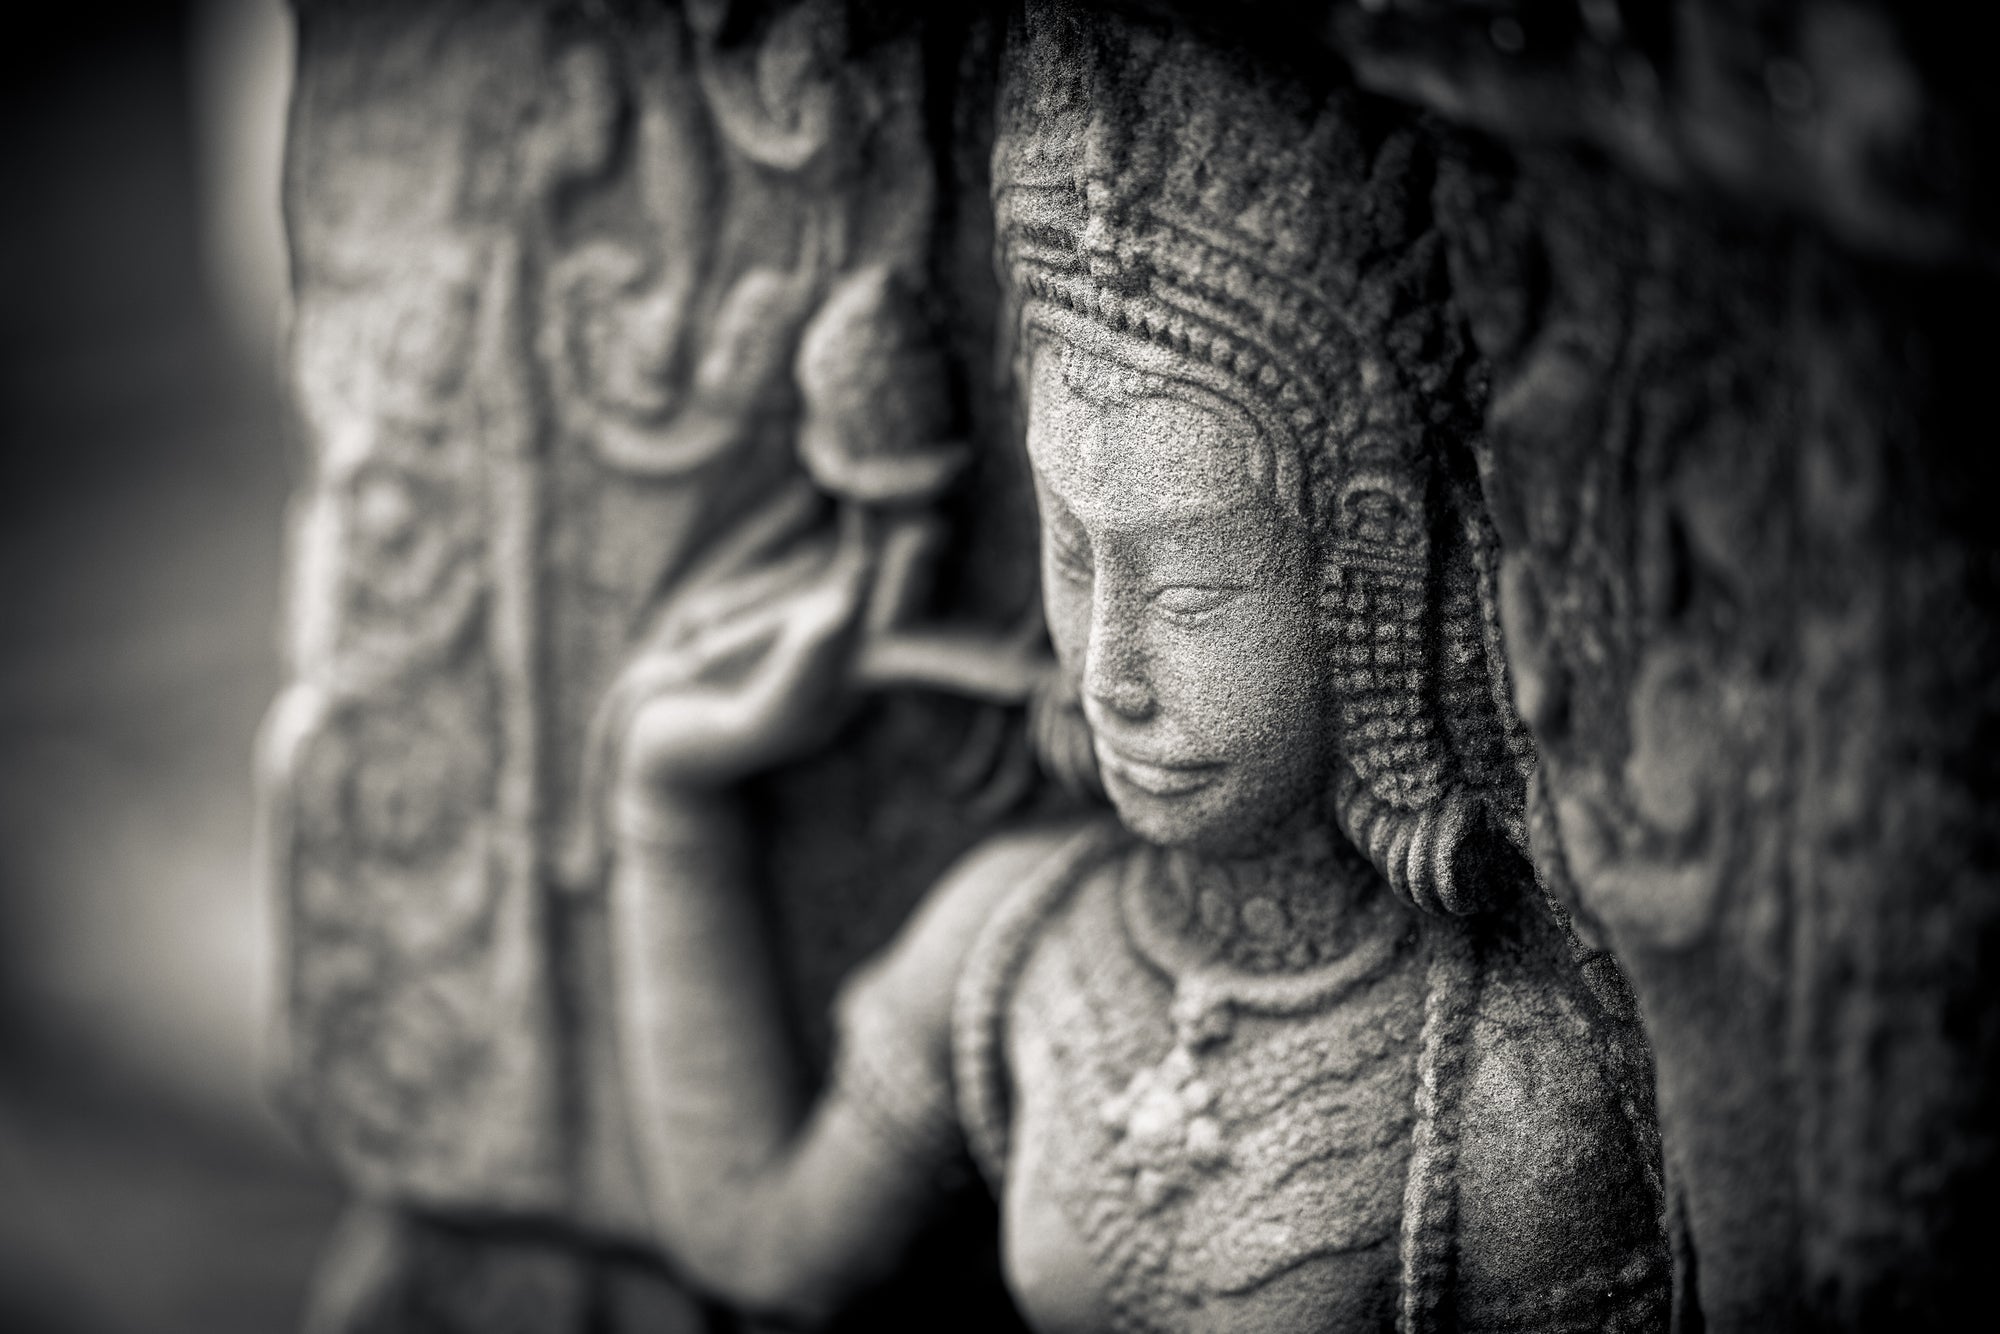 Apsara (Devata), Banteay Kdei Temple, Angkor, Cambodia